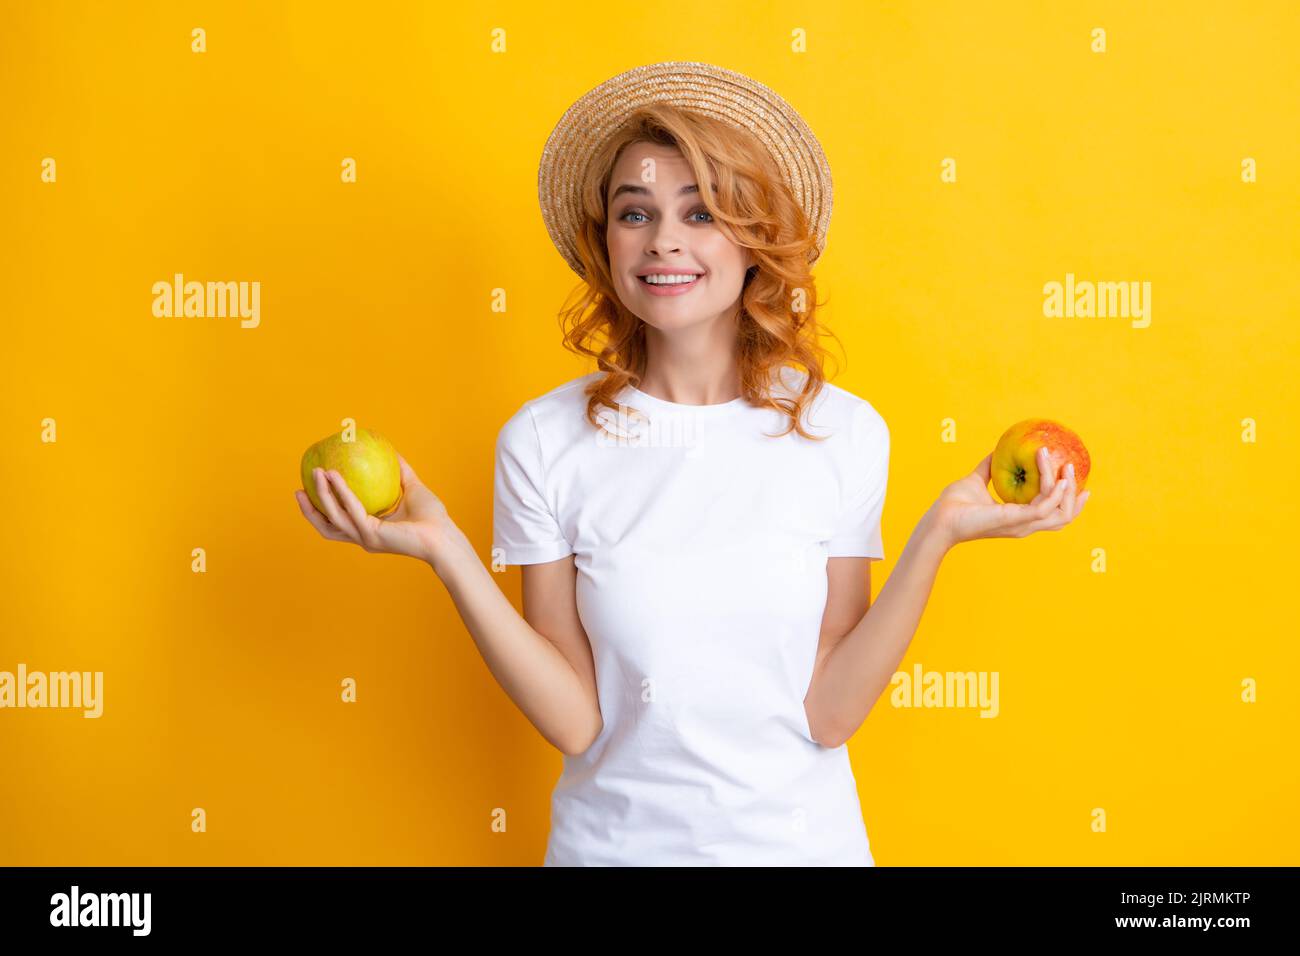 Beautiful caucasian woman holding apple, smiling happy, studio isolated portrait. Stock Photo